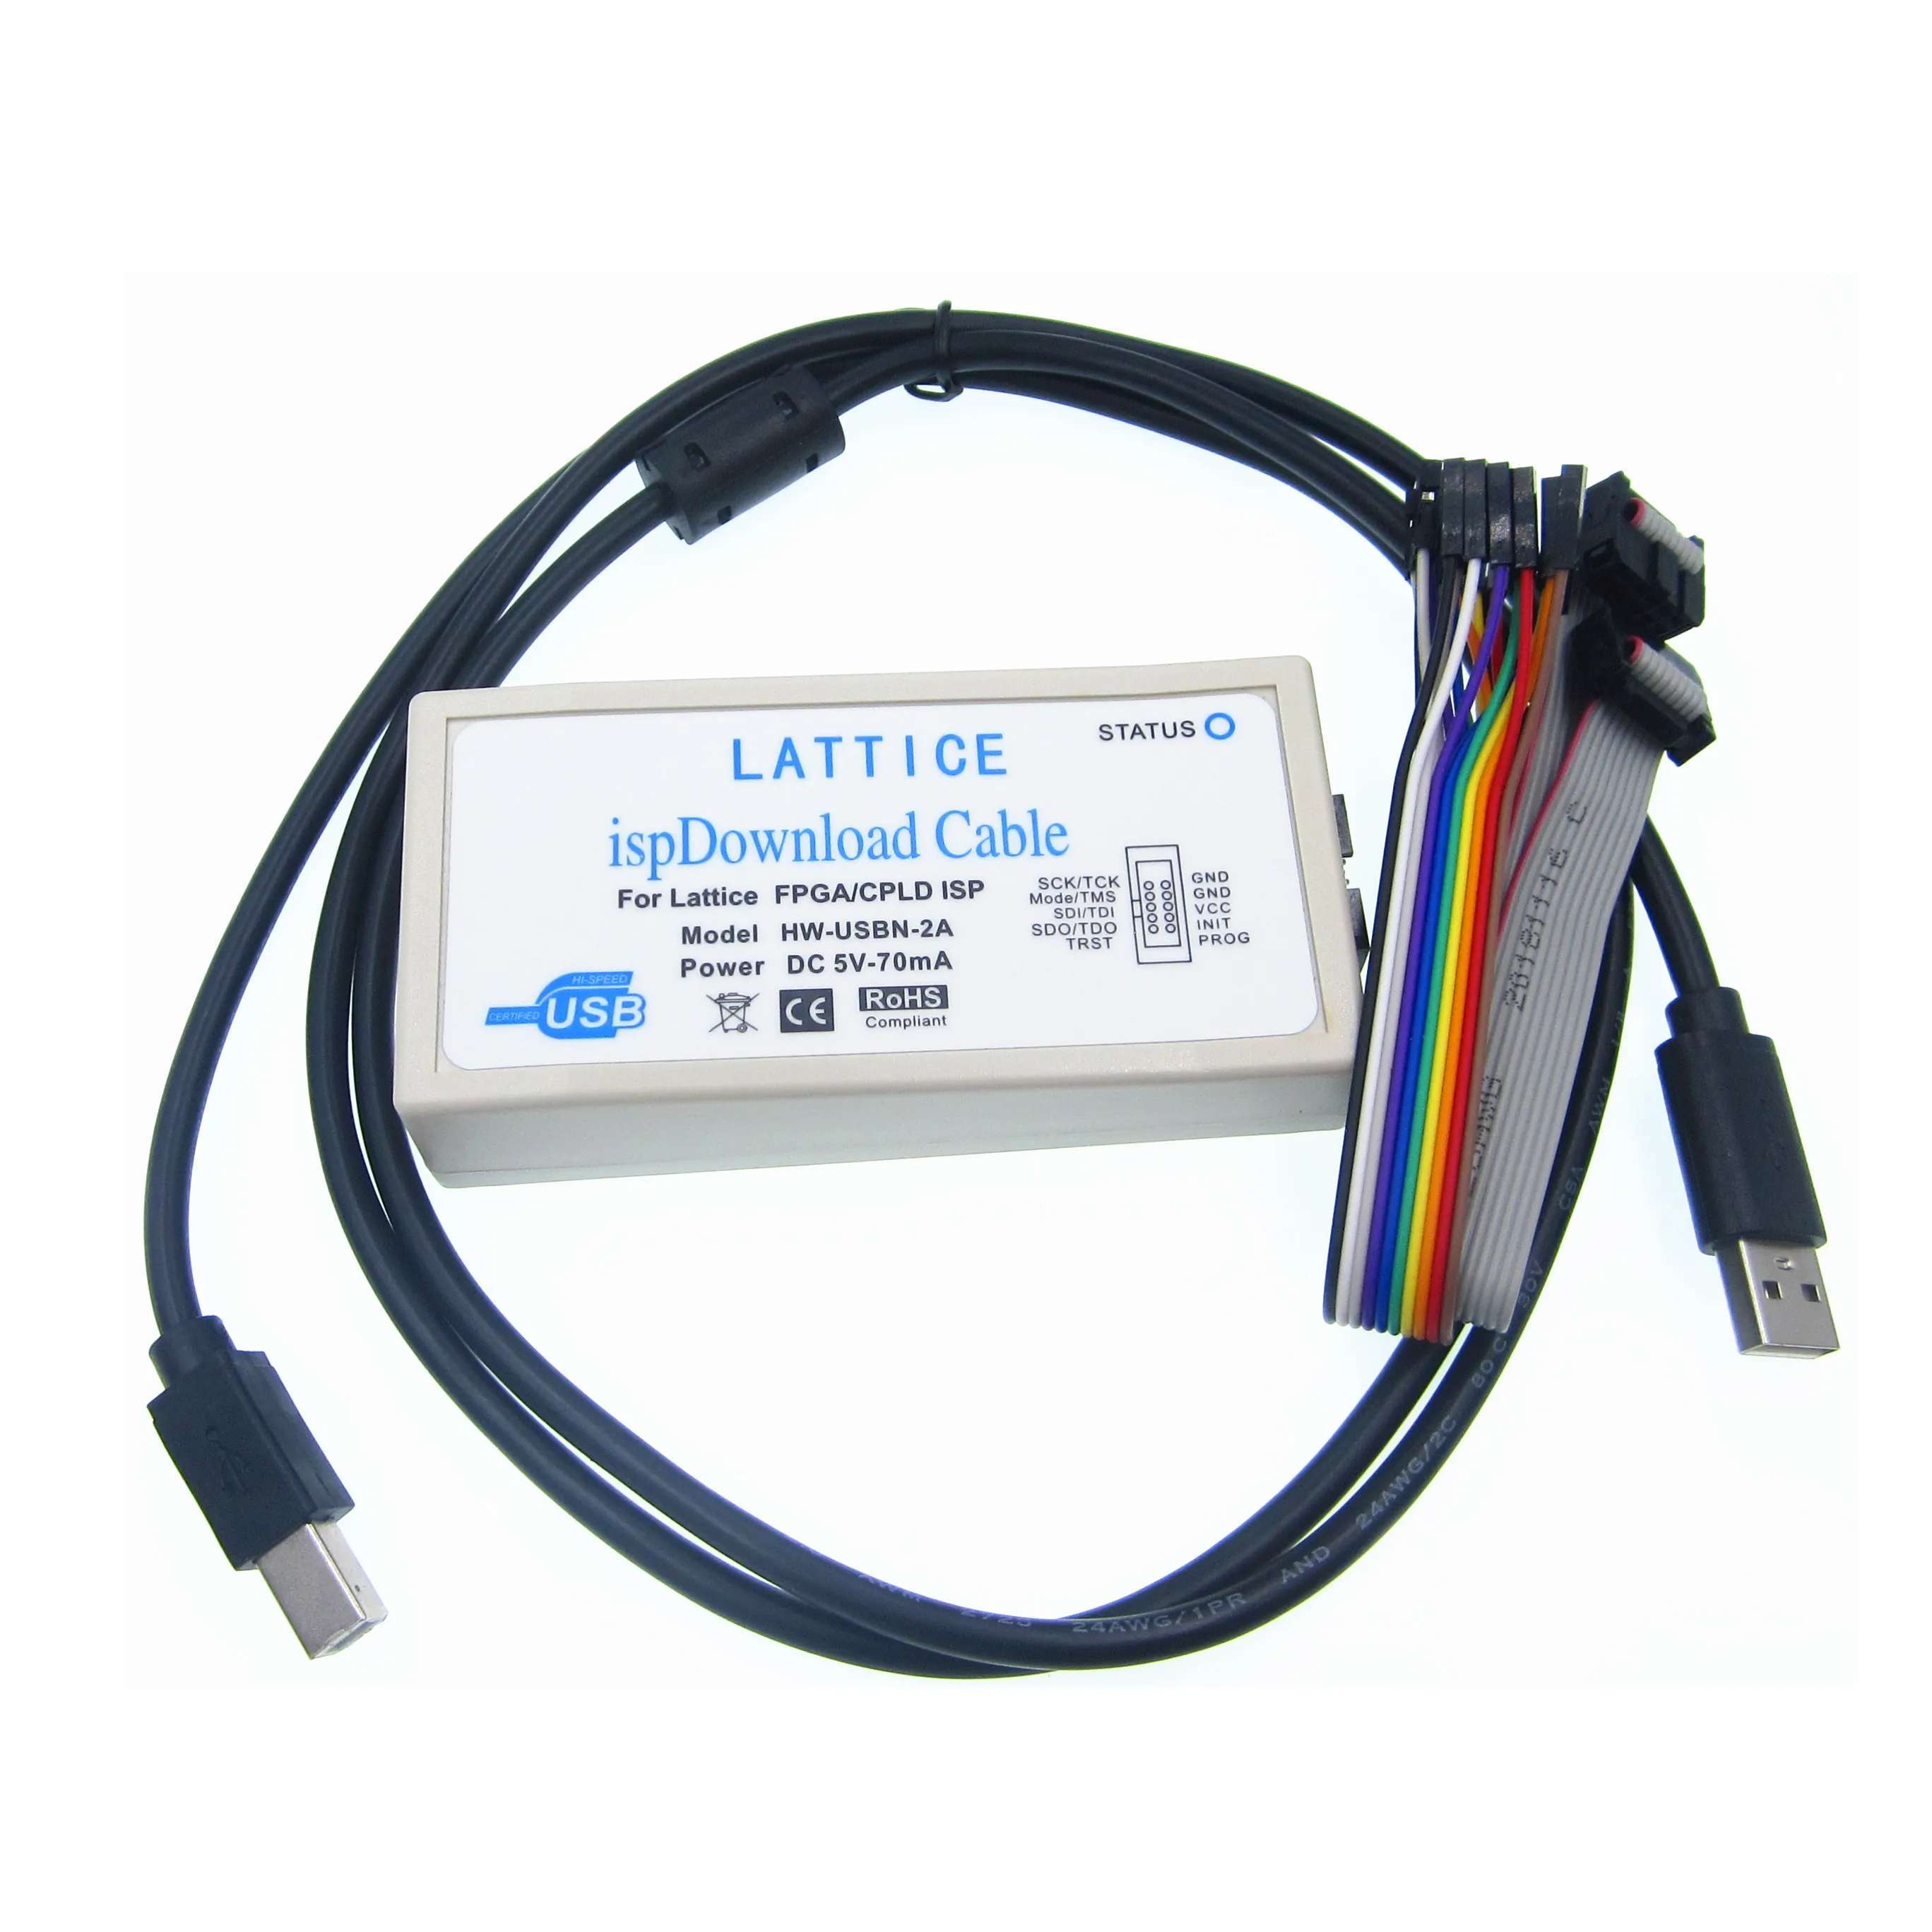 Details about   USB Download Cable Jtag ISP for LATTICE FPGA HW-USBN-2A Support Windows 